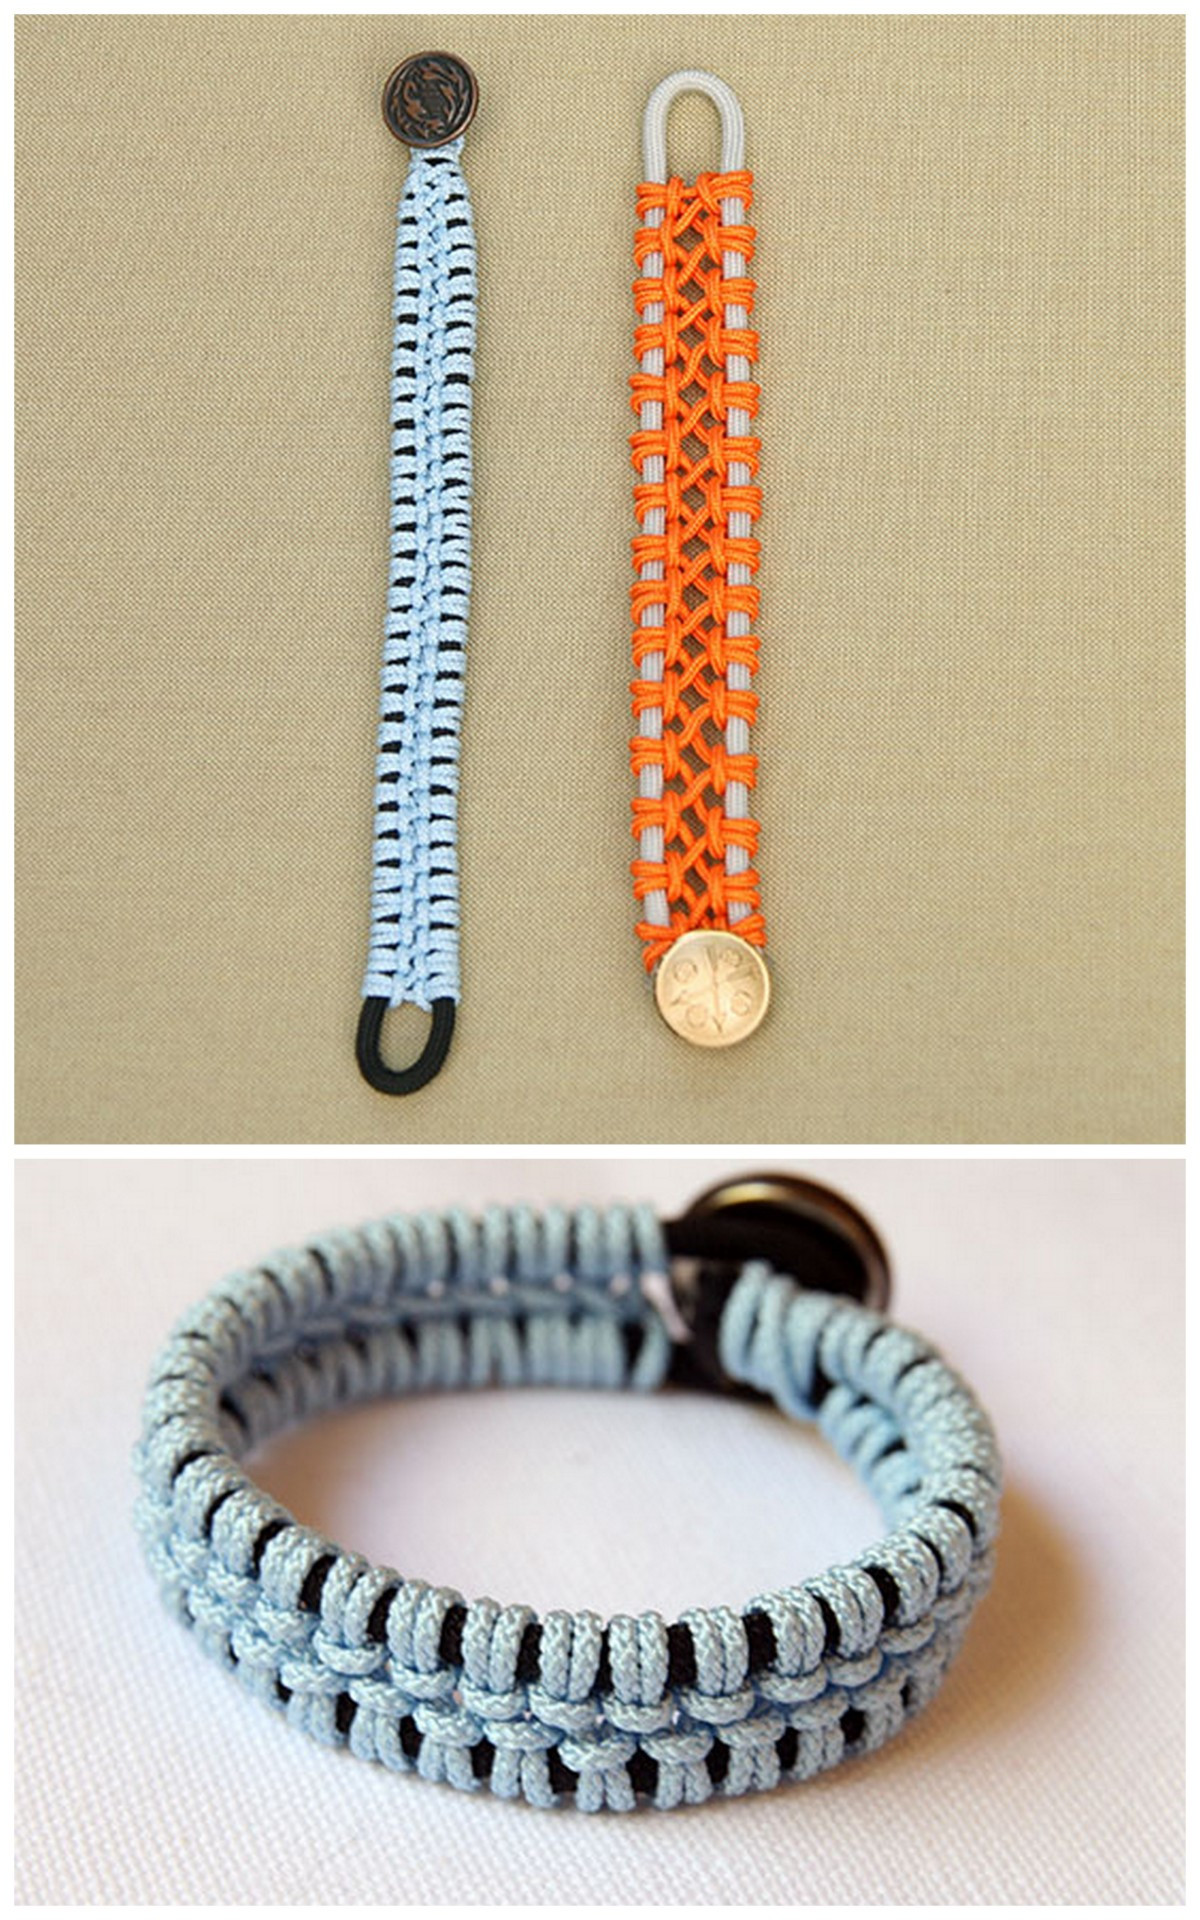 Best ideas about DIY Paracord Bracelet
. Save or Pin True Blue Me & You DIYs for Creatives • DIY Macrame Now.